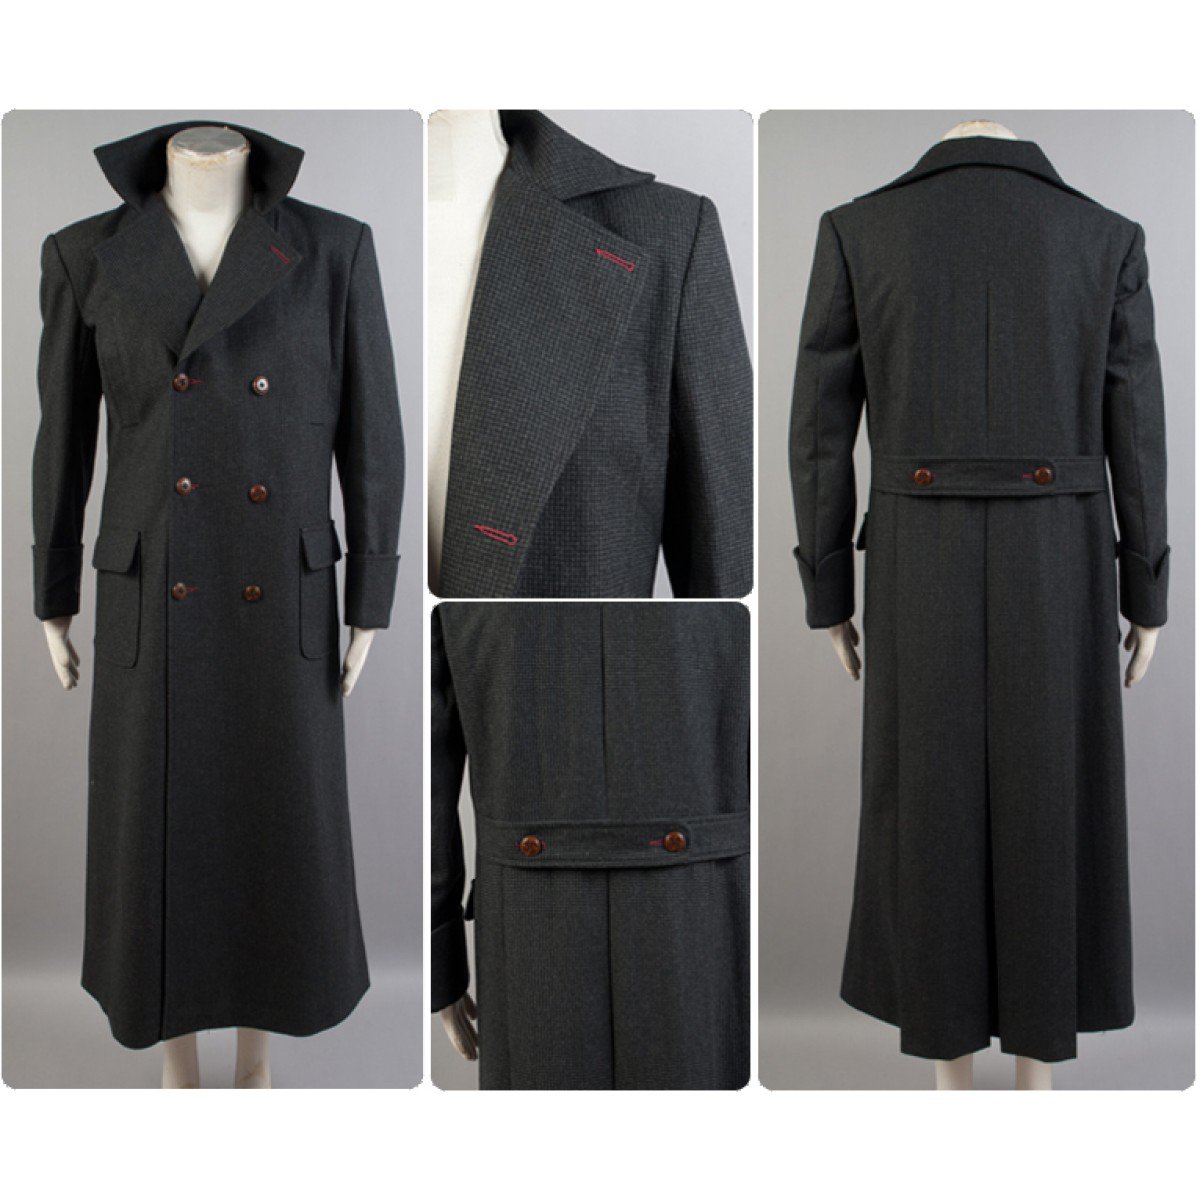 Sherlock Holmes Cape Coat Costume for Sale